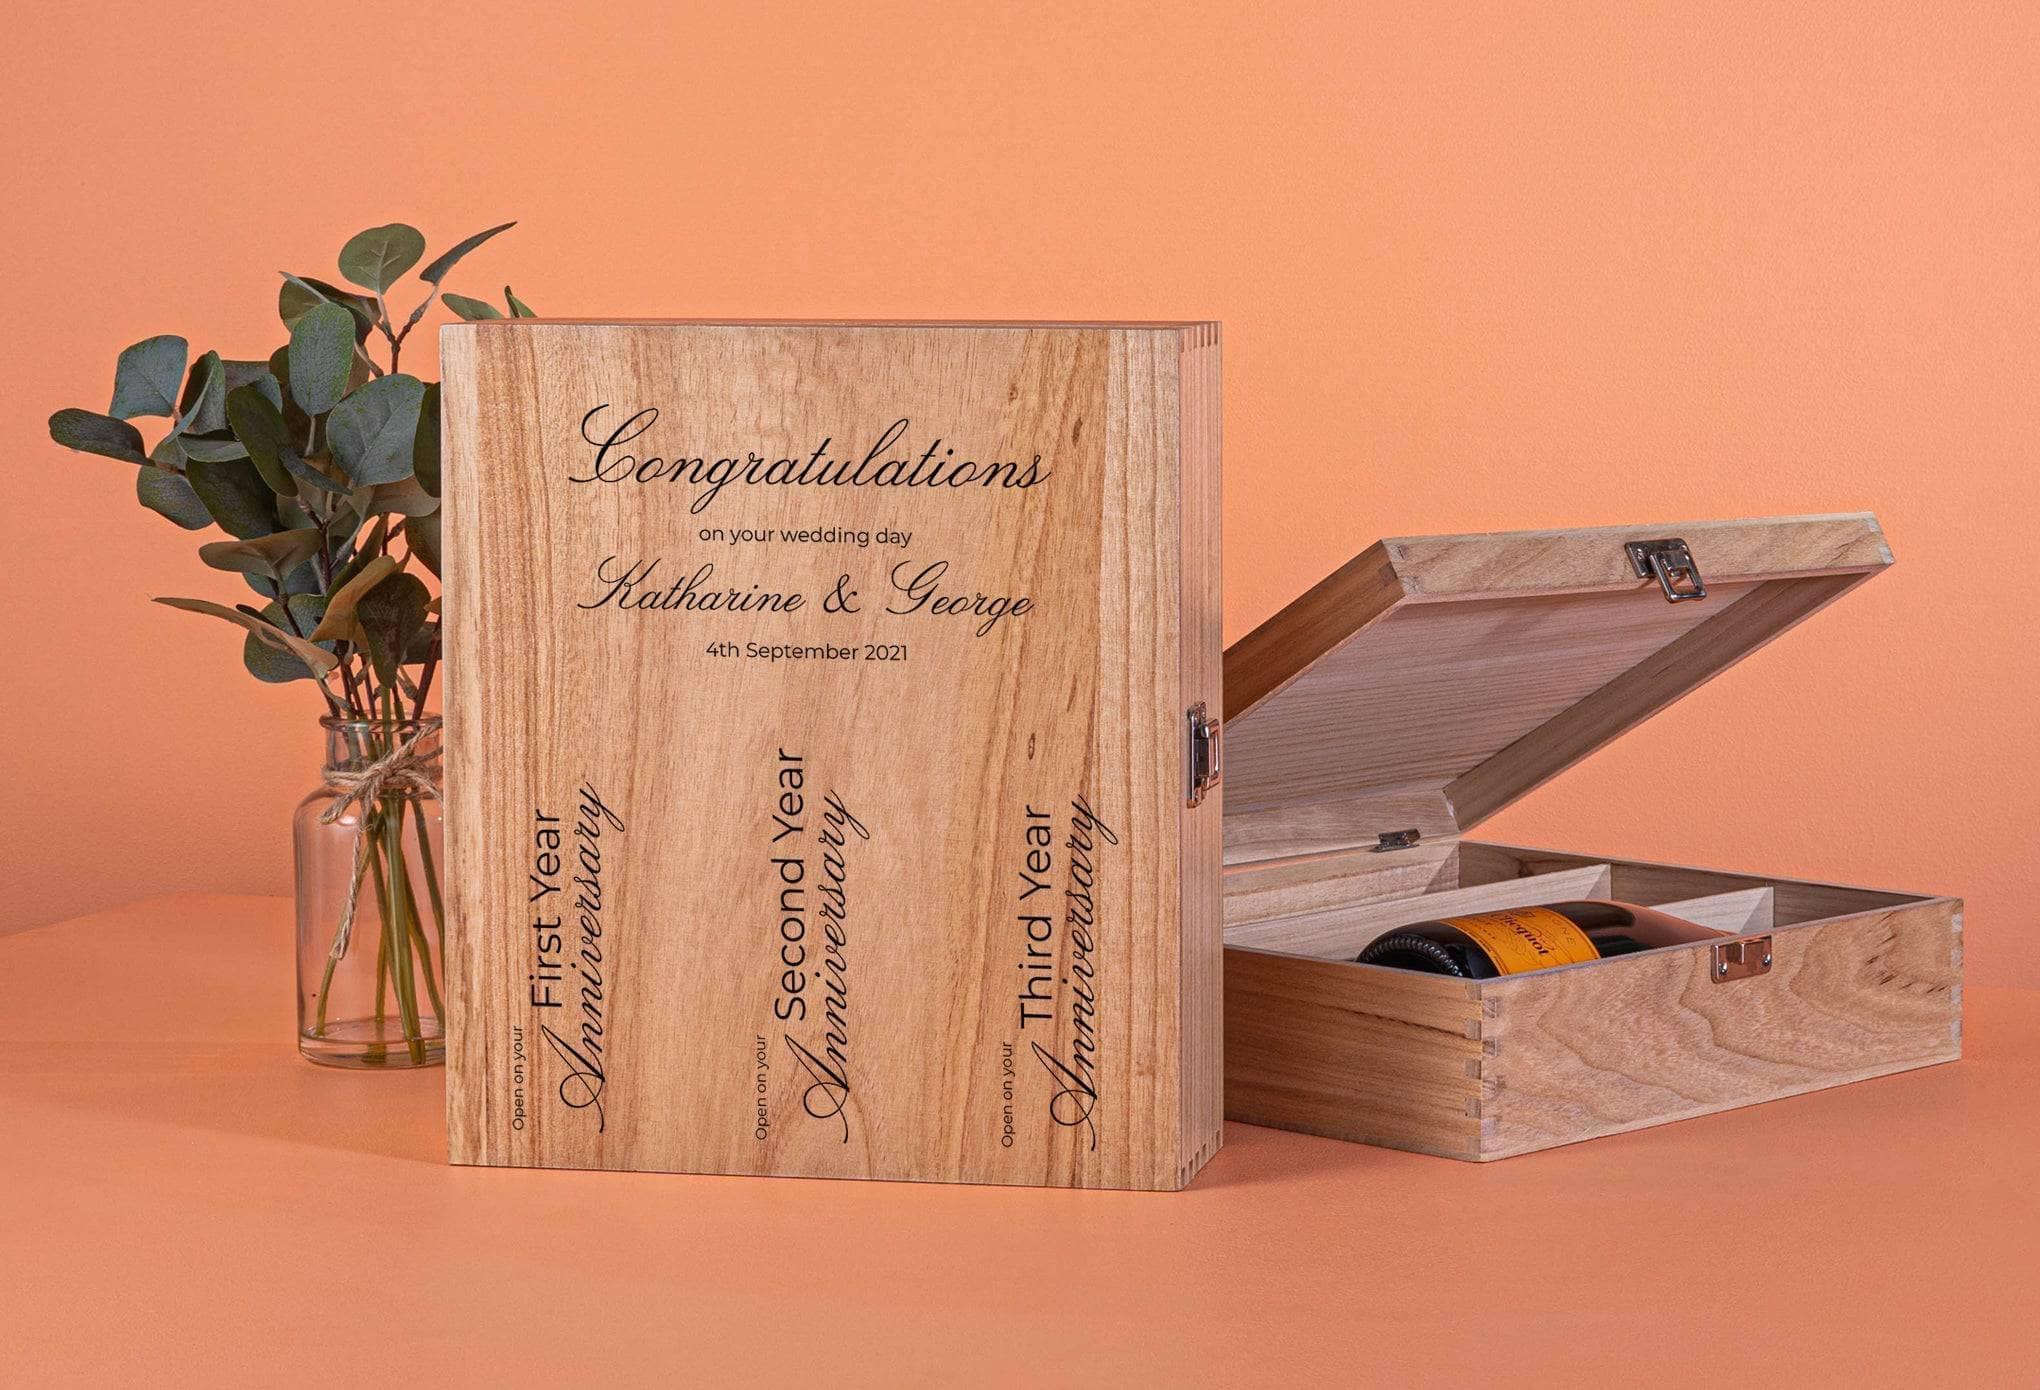 Peach Hampers Personal Hampers Three Bottle Engraved Wedding Wine Box